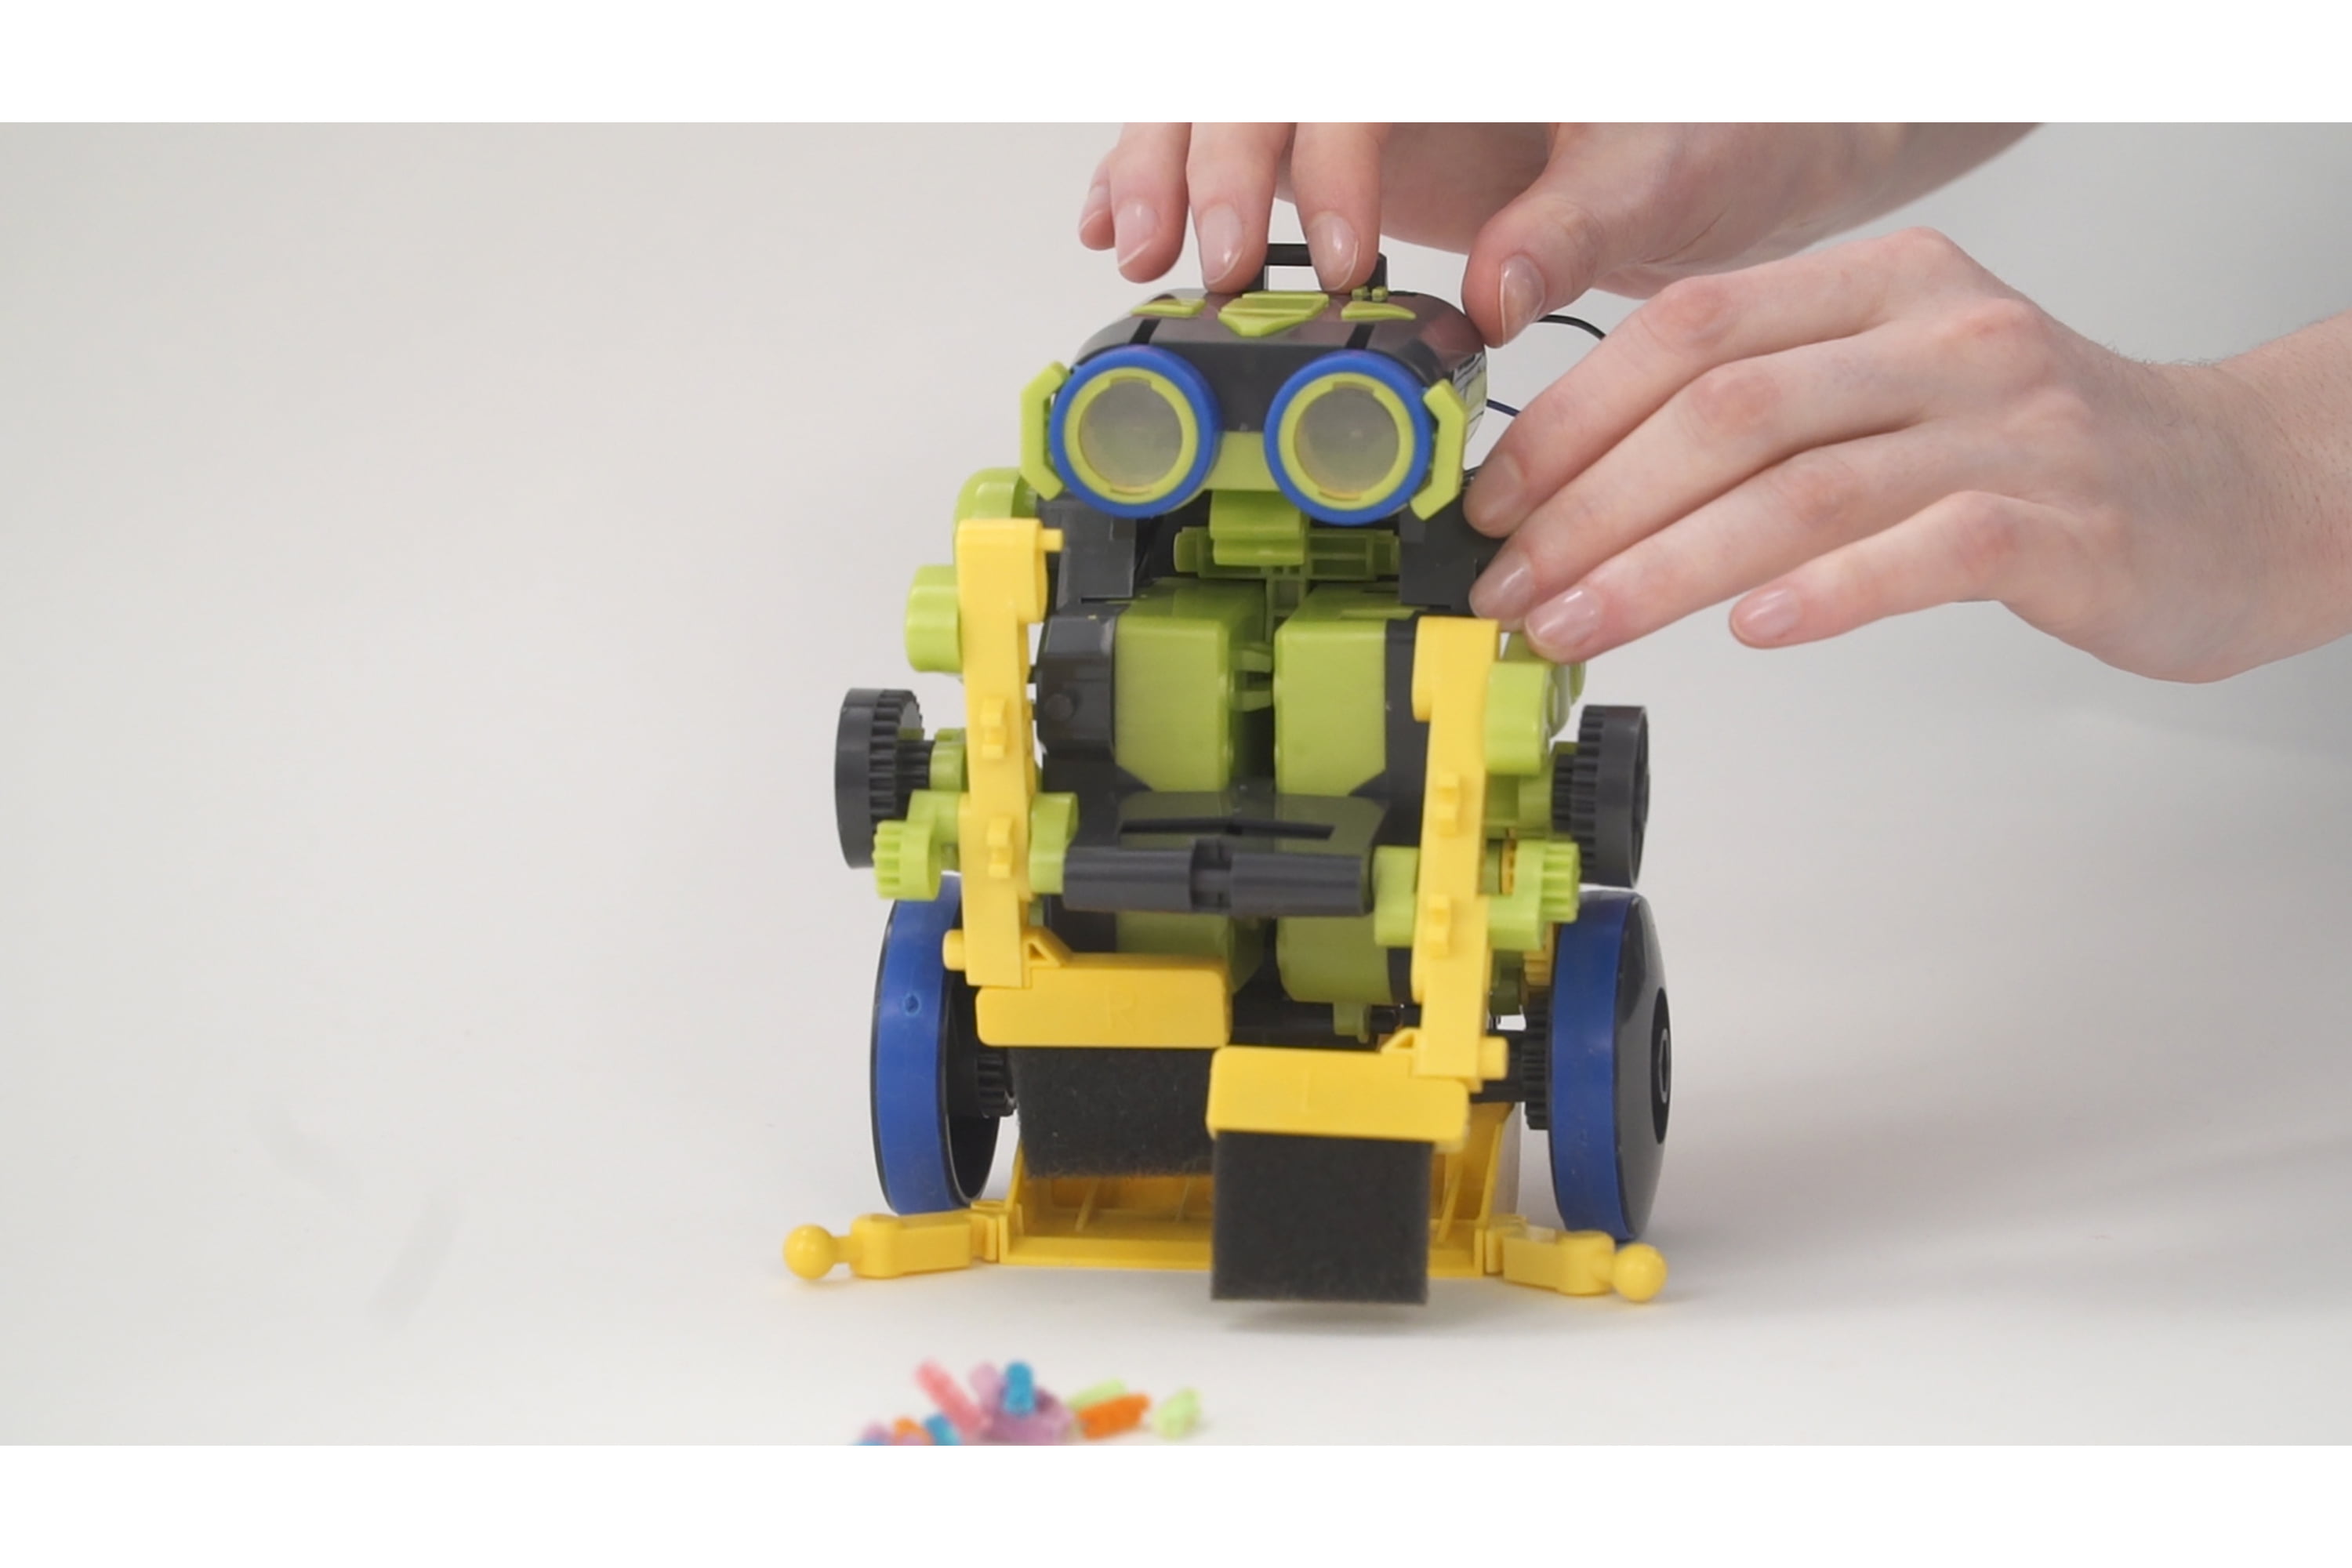 Teach Tech KC3 Keypad Coding Robot - Kidstop toys and books